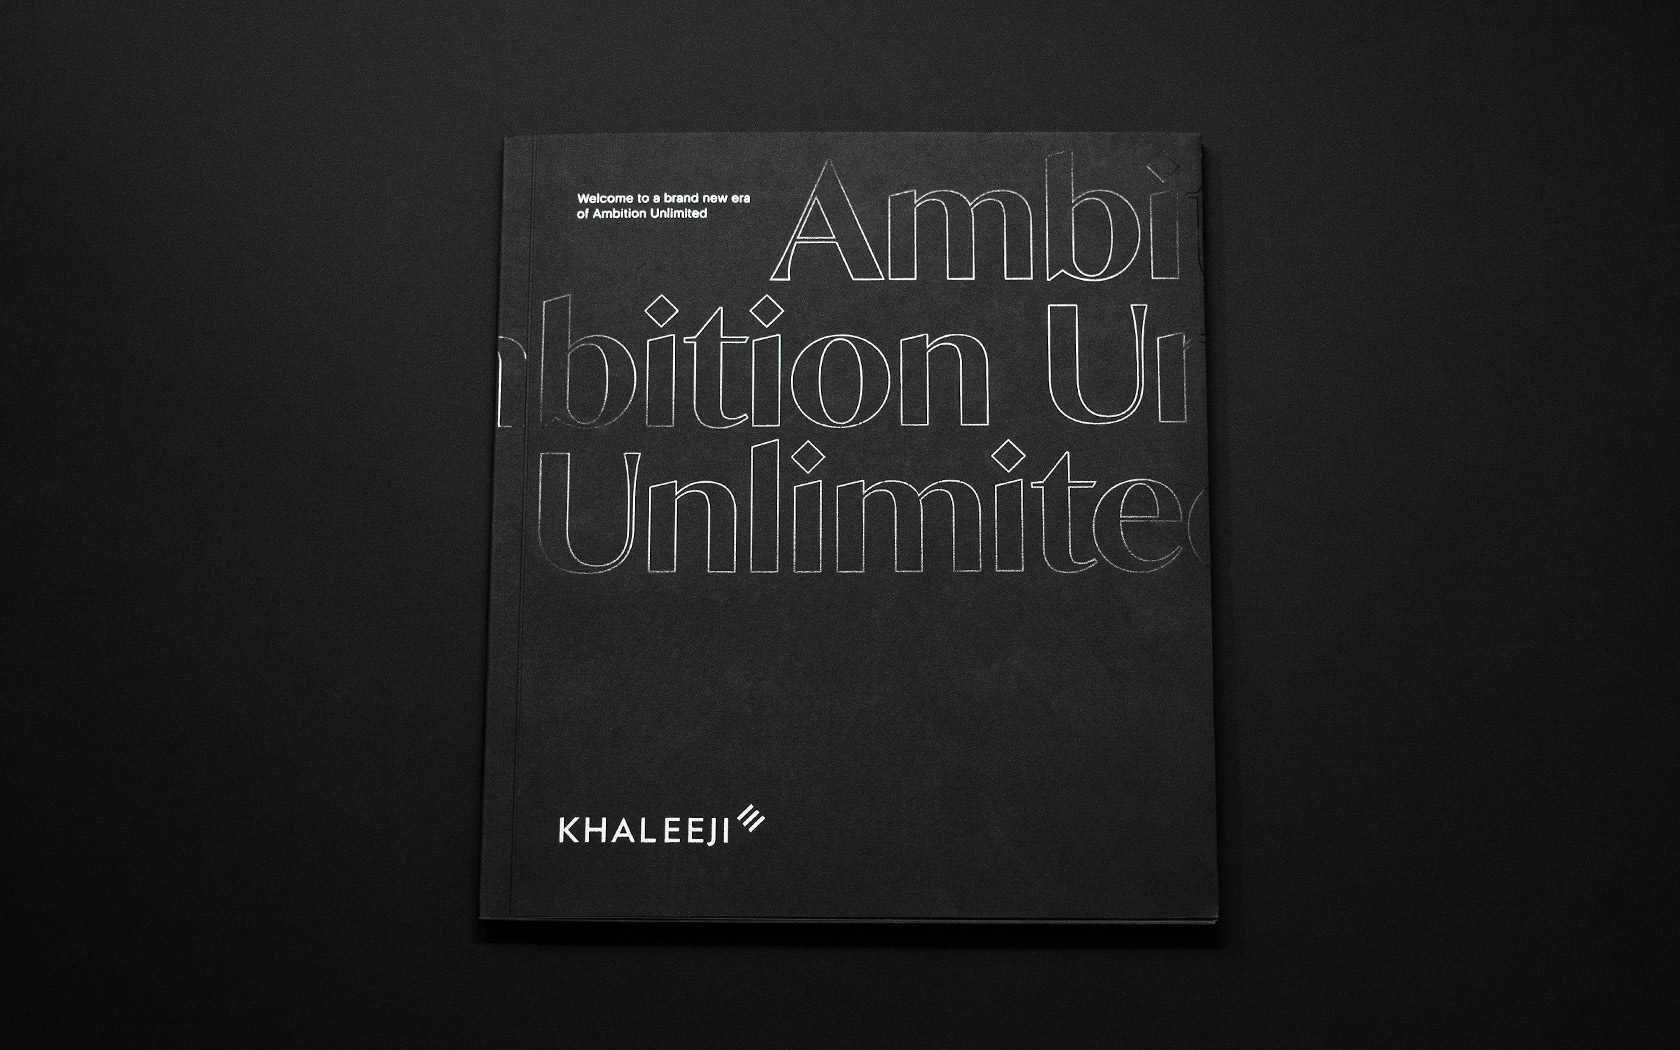 Khaleeji. Corporate Profile cover